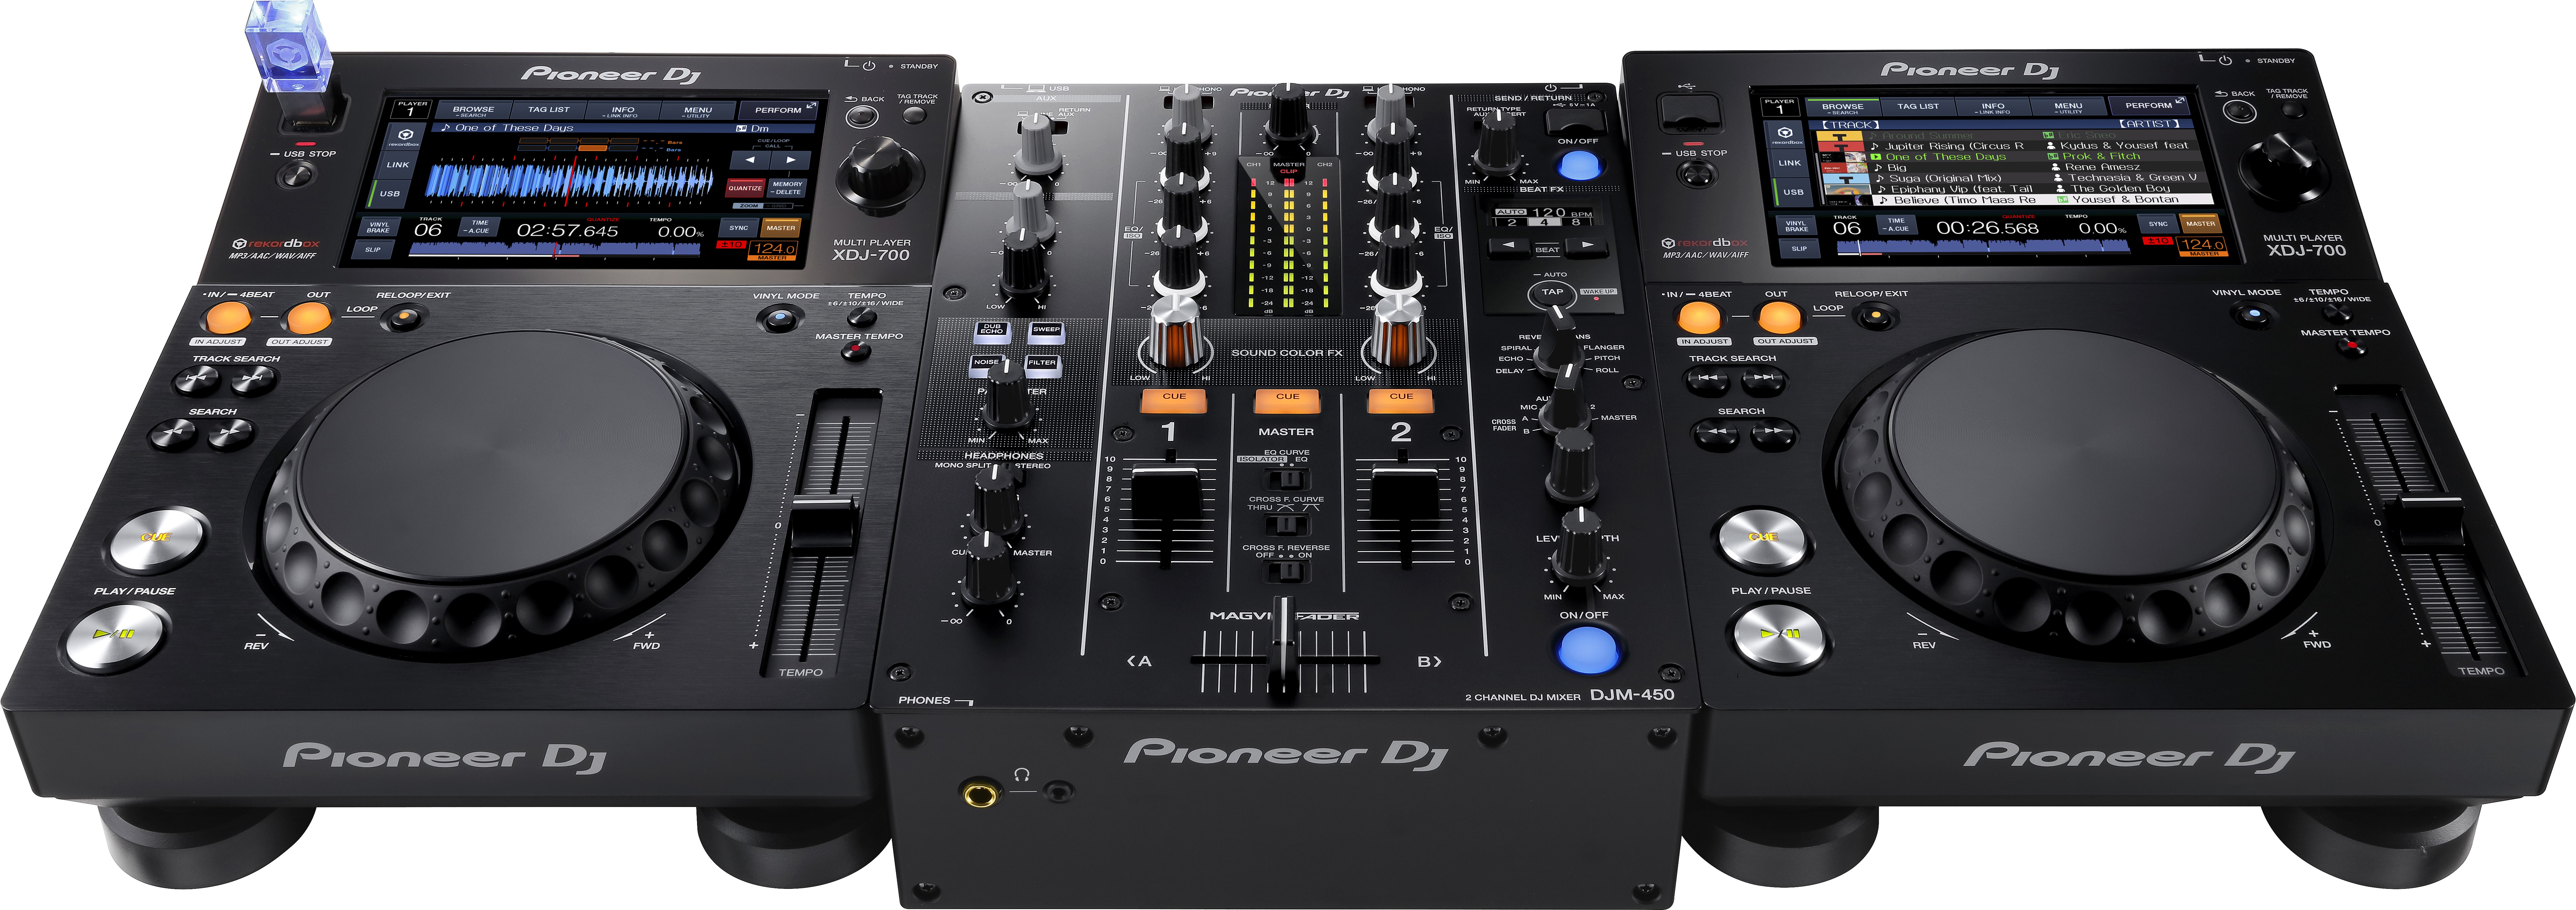 Pioneer DJ DJM-450 + Pioneer DJ XDJ-700 Multiplayer Bundle Deal 